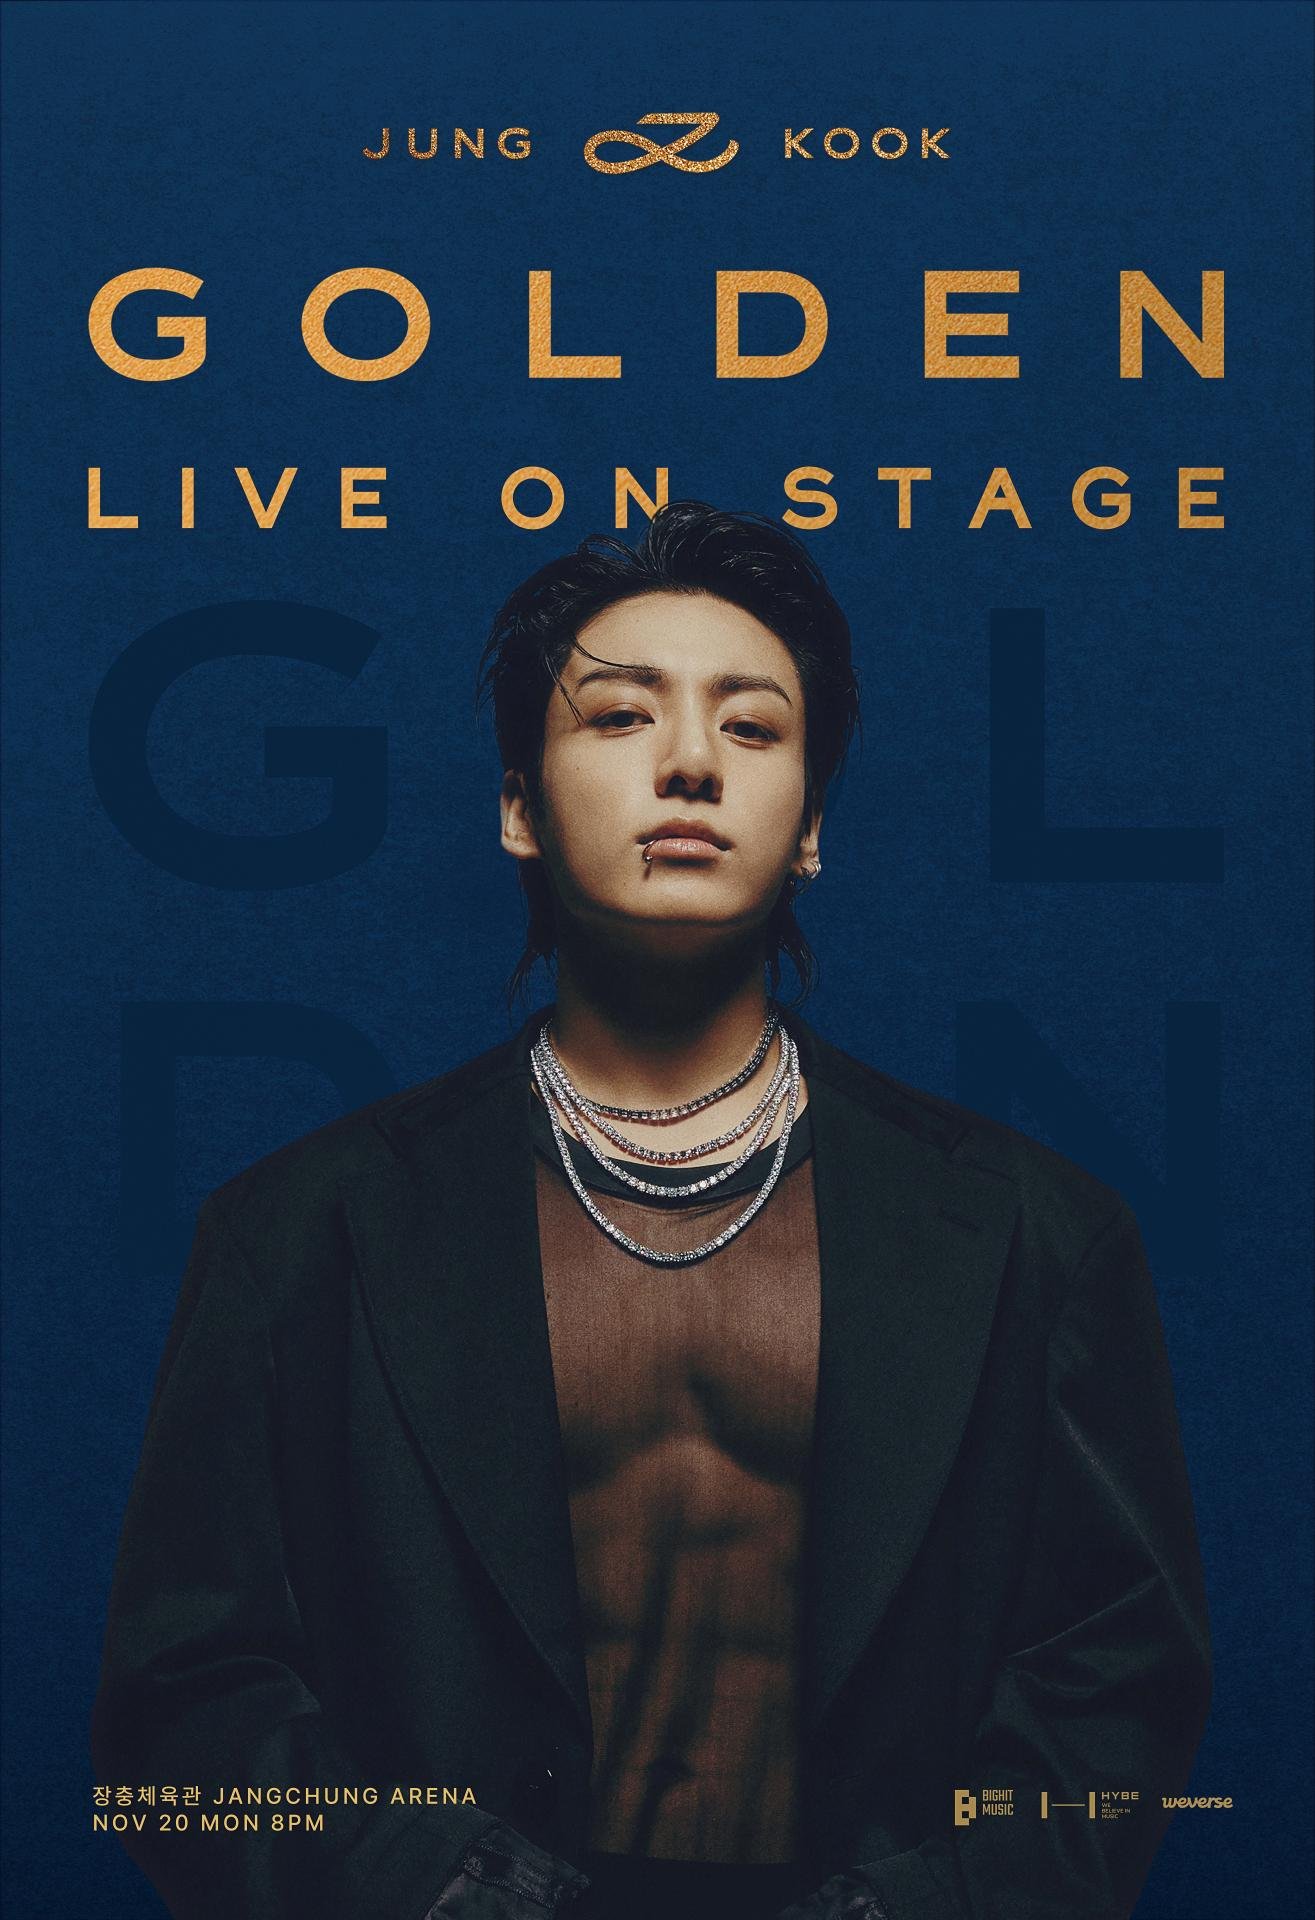 BTS's Jungkook Announces “'GOLDEN' Live On Stage” Concert